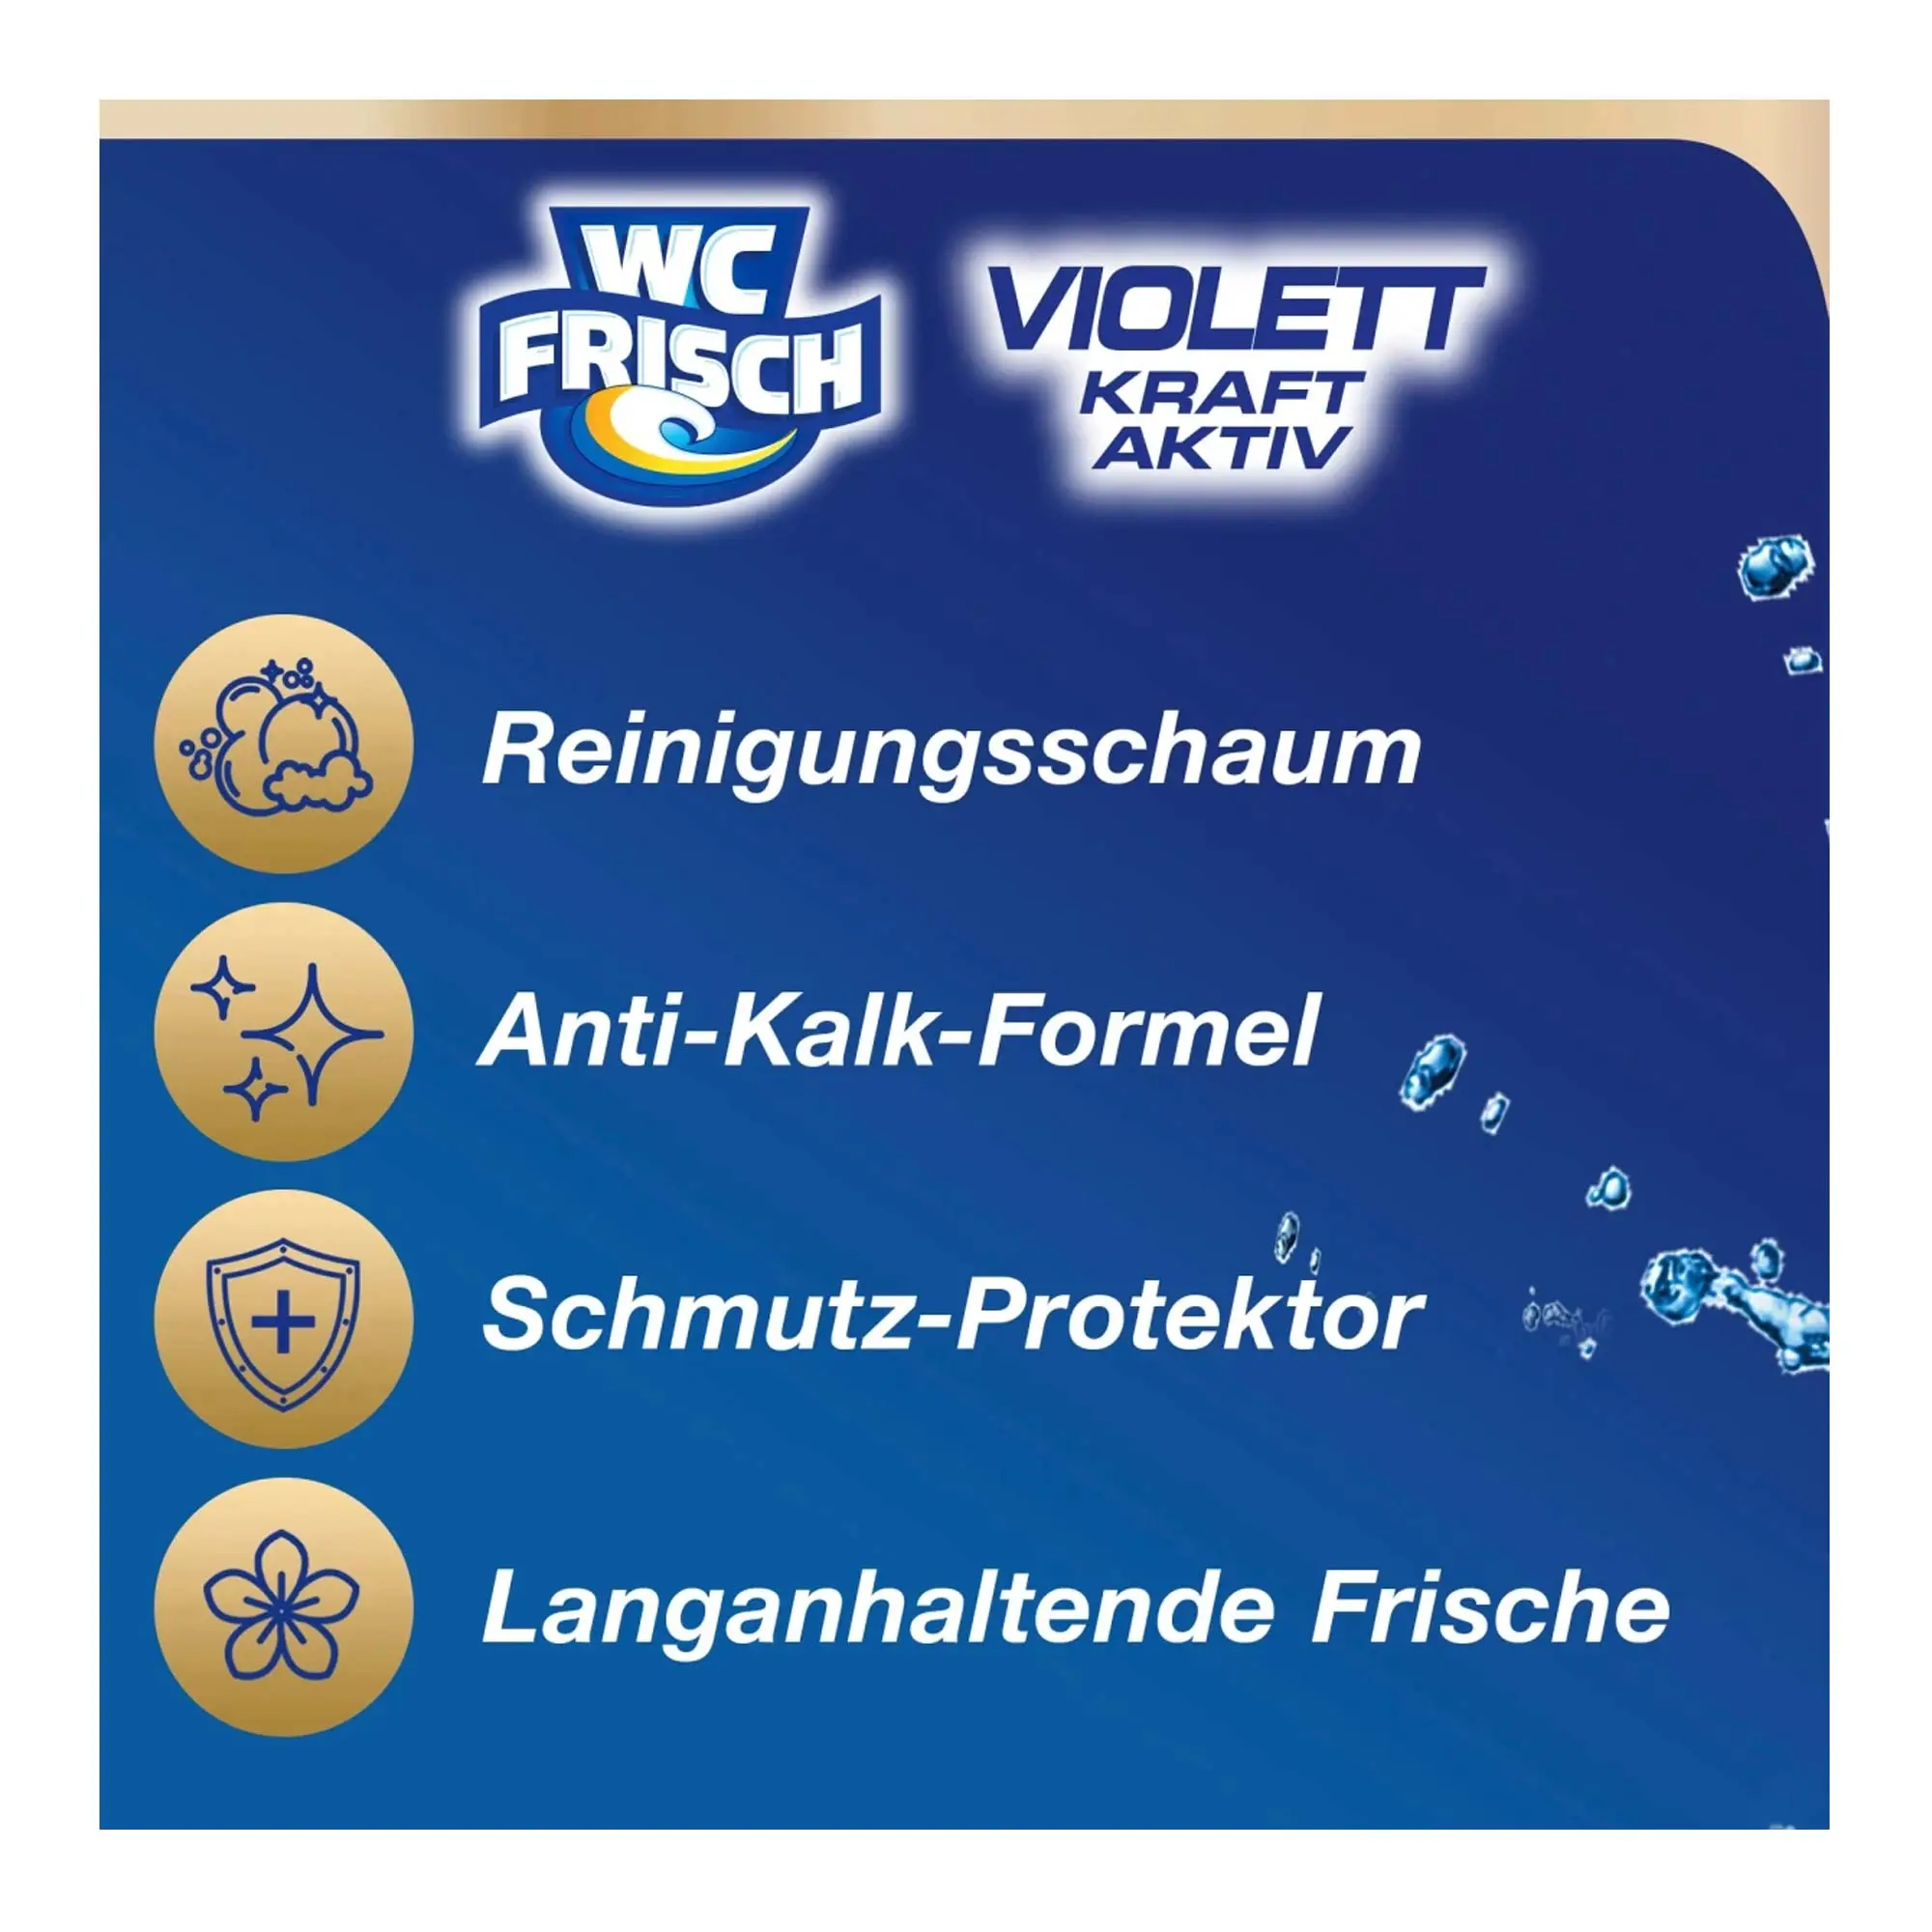 WC Frisch Violett Kraft-Aktiv Magnolie WC-Farbspüler